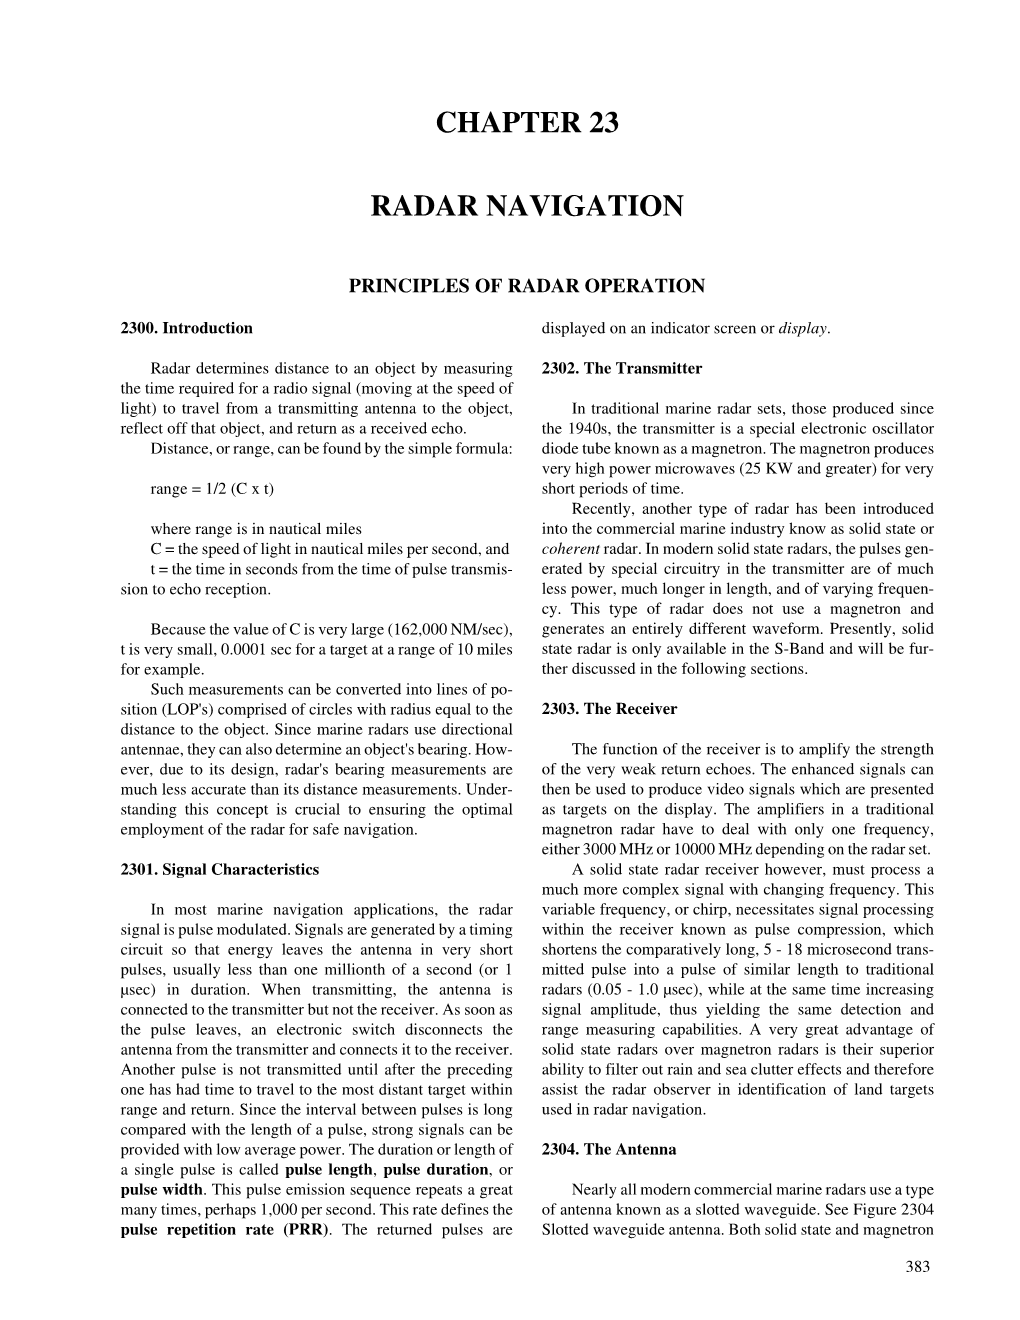 Chapter 23 Radar Navigation